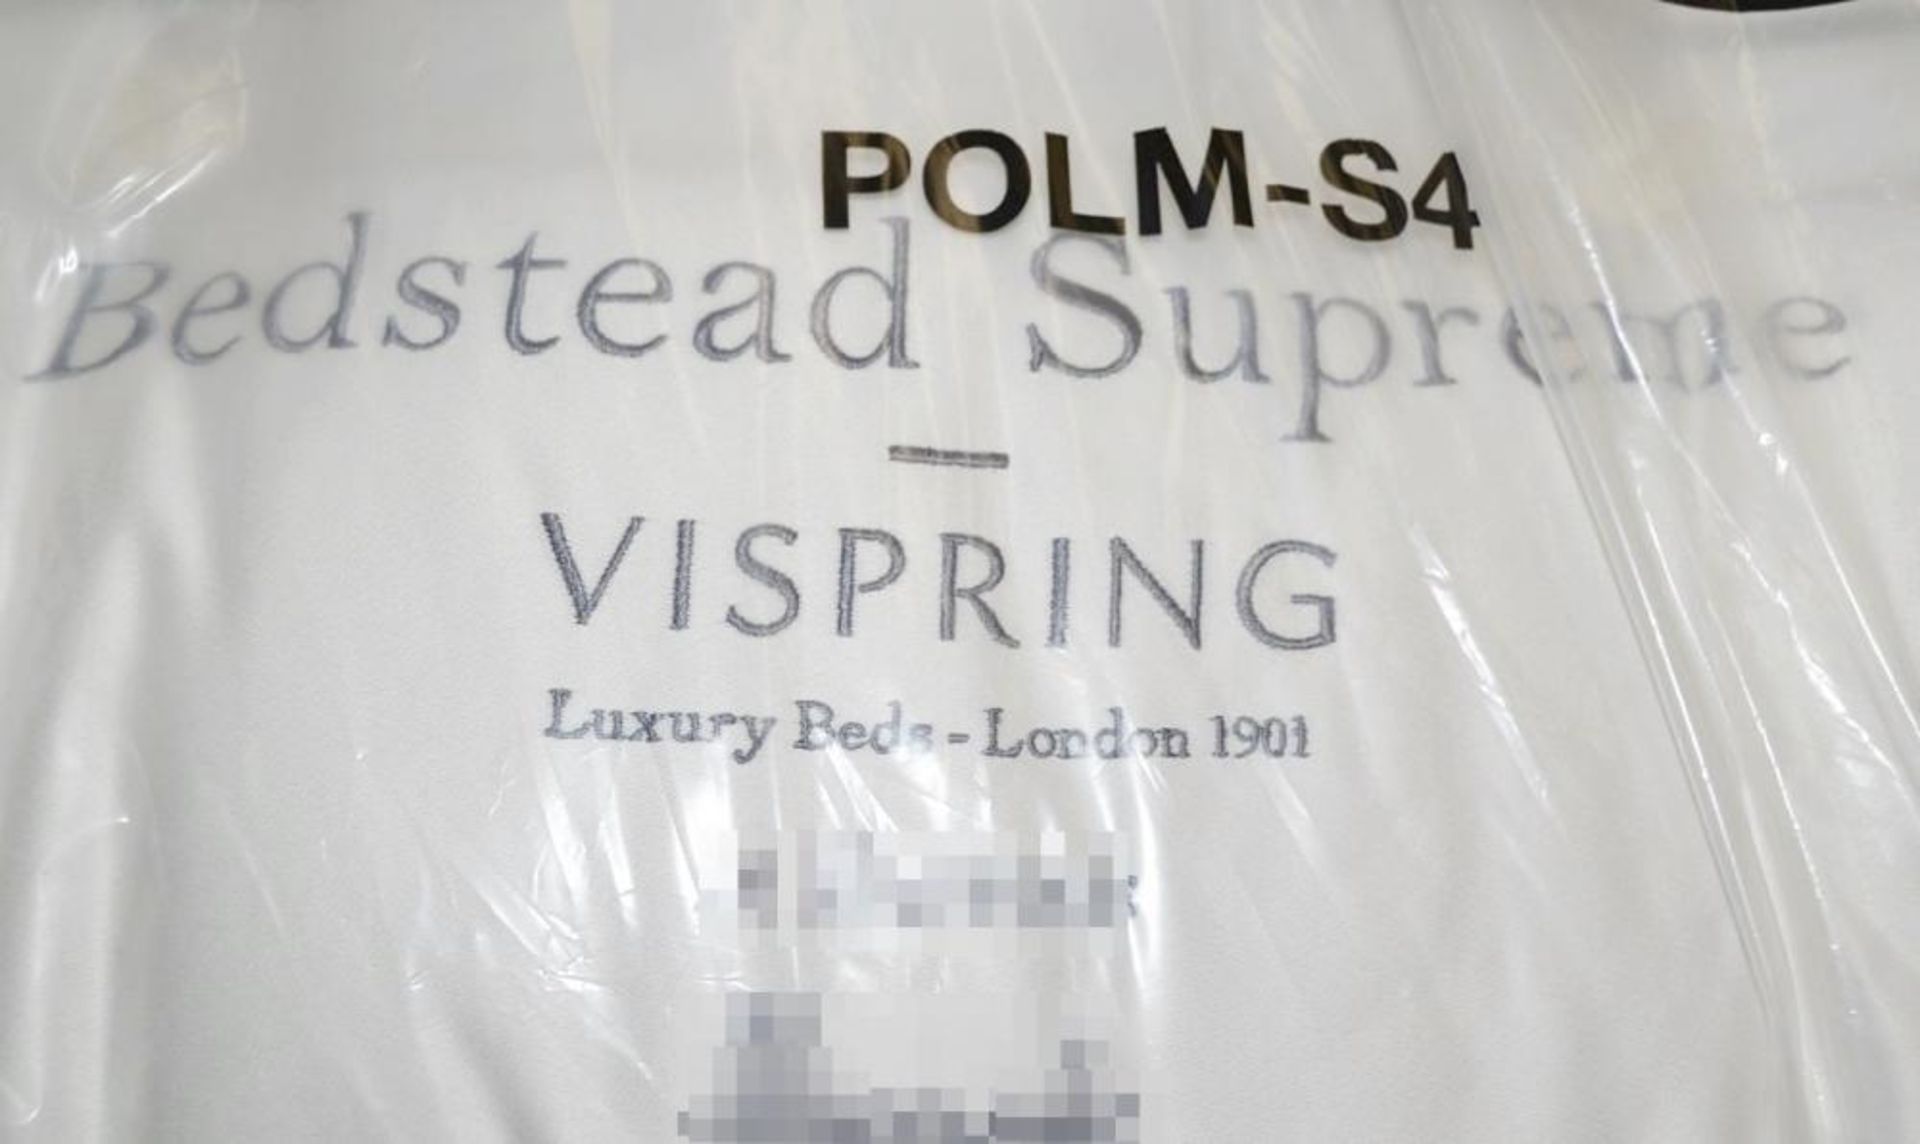 1 x Vispring 'Bedstead Supreme' Luxury Mattress - Custom Size: 175 x 200 x 23cm - Handmade In Great - Image 6 of 10